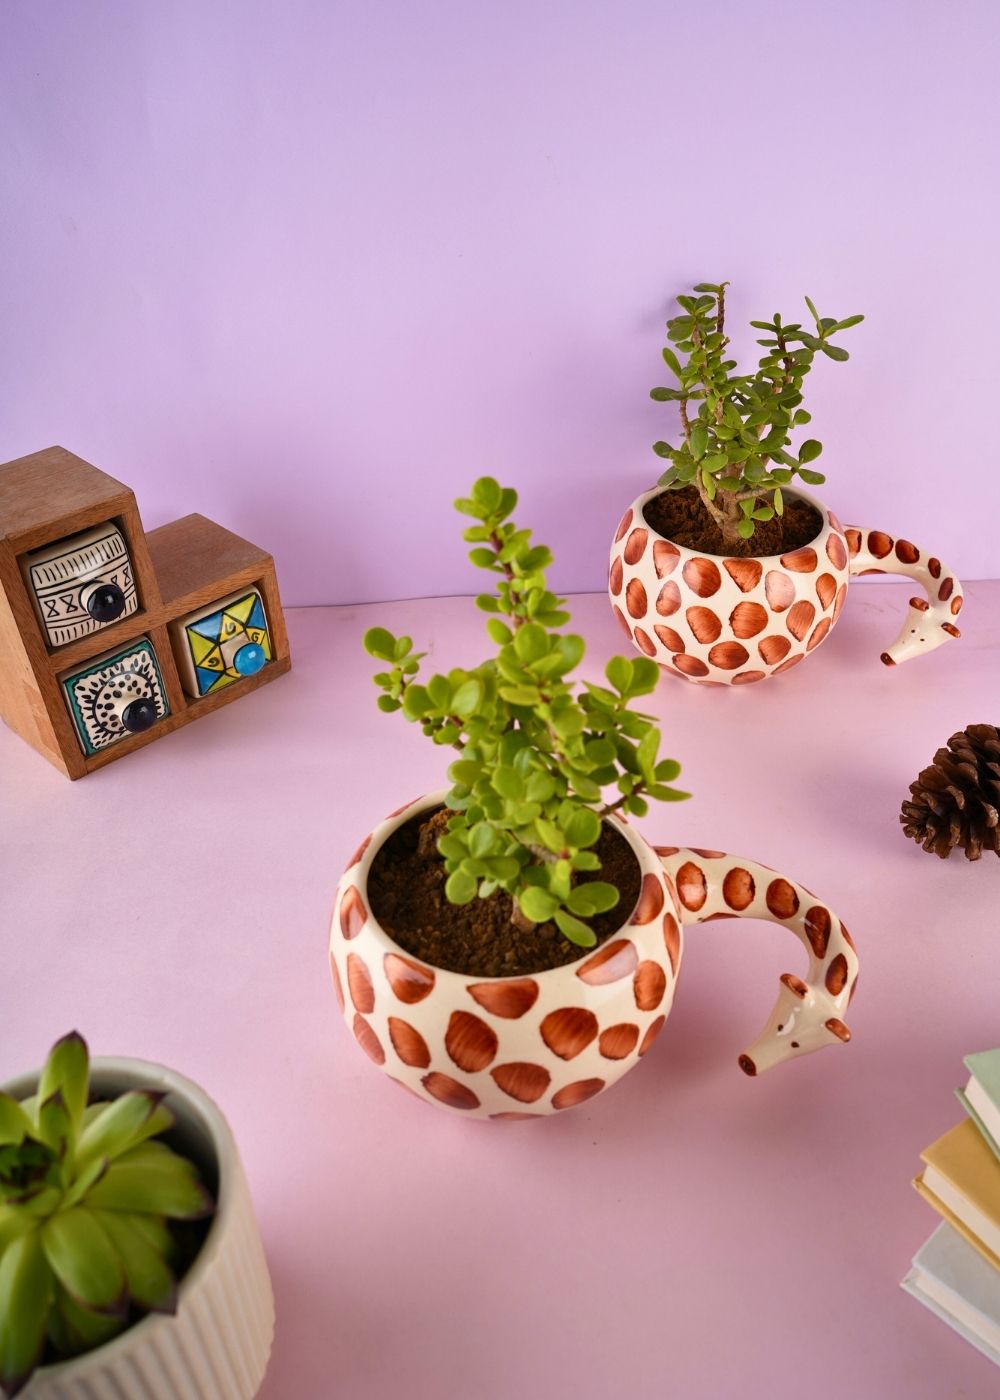 hello giraffe planter with cute giraffe design